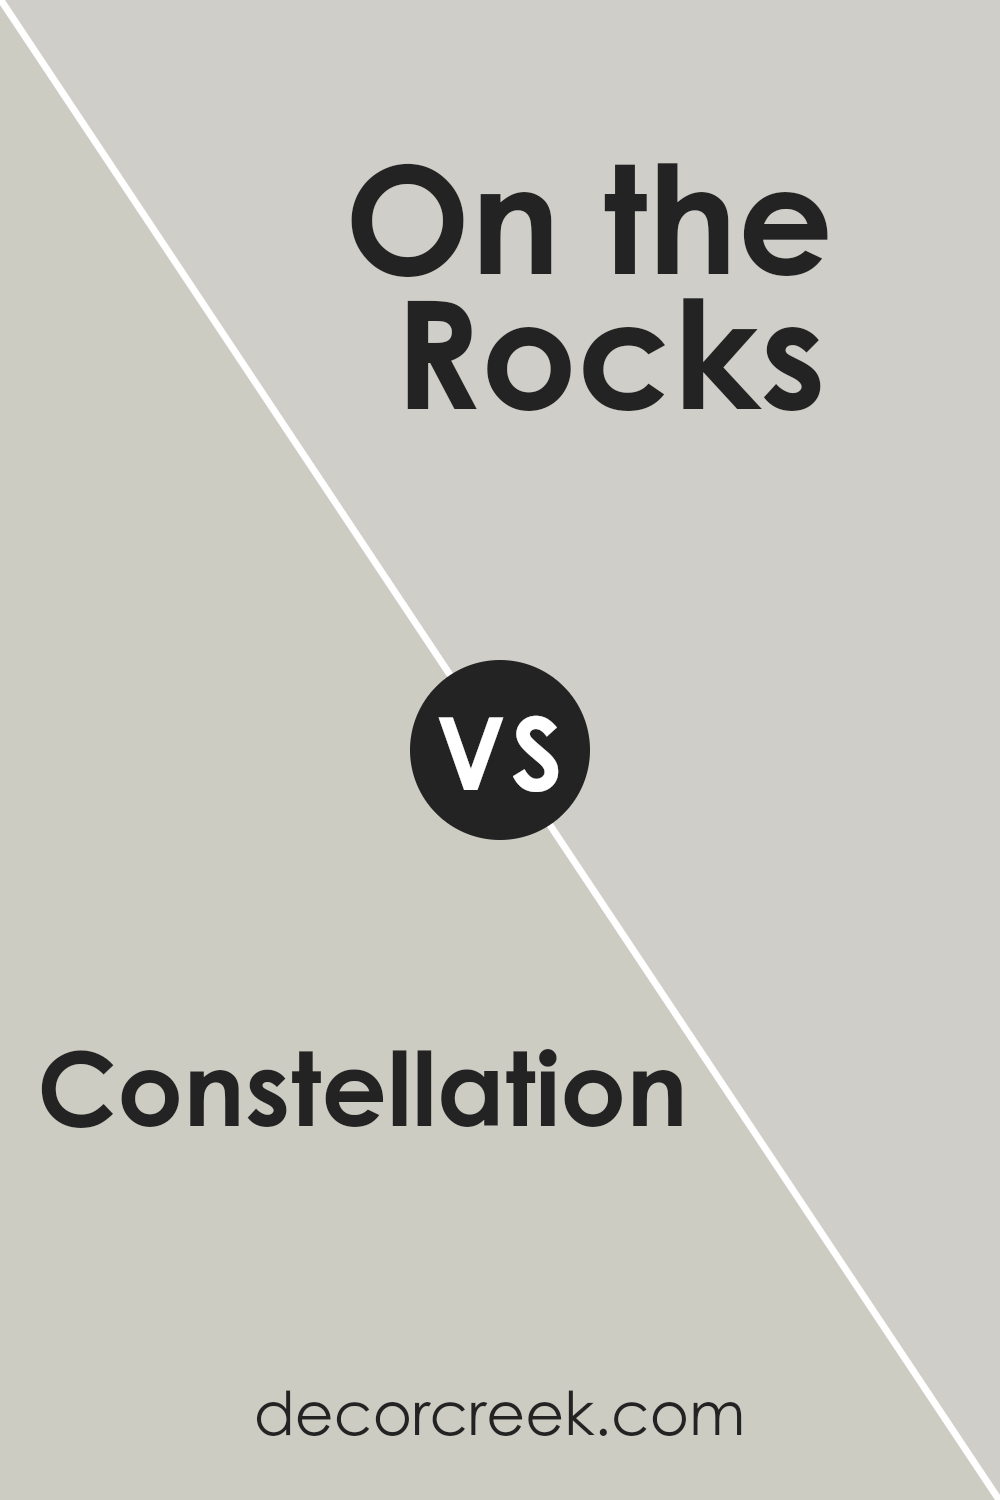 constellation_sw_9629_vs_on_the_rocks_sw_7671